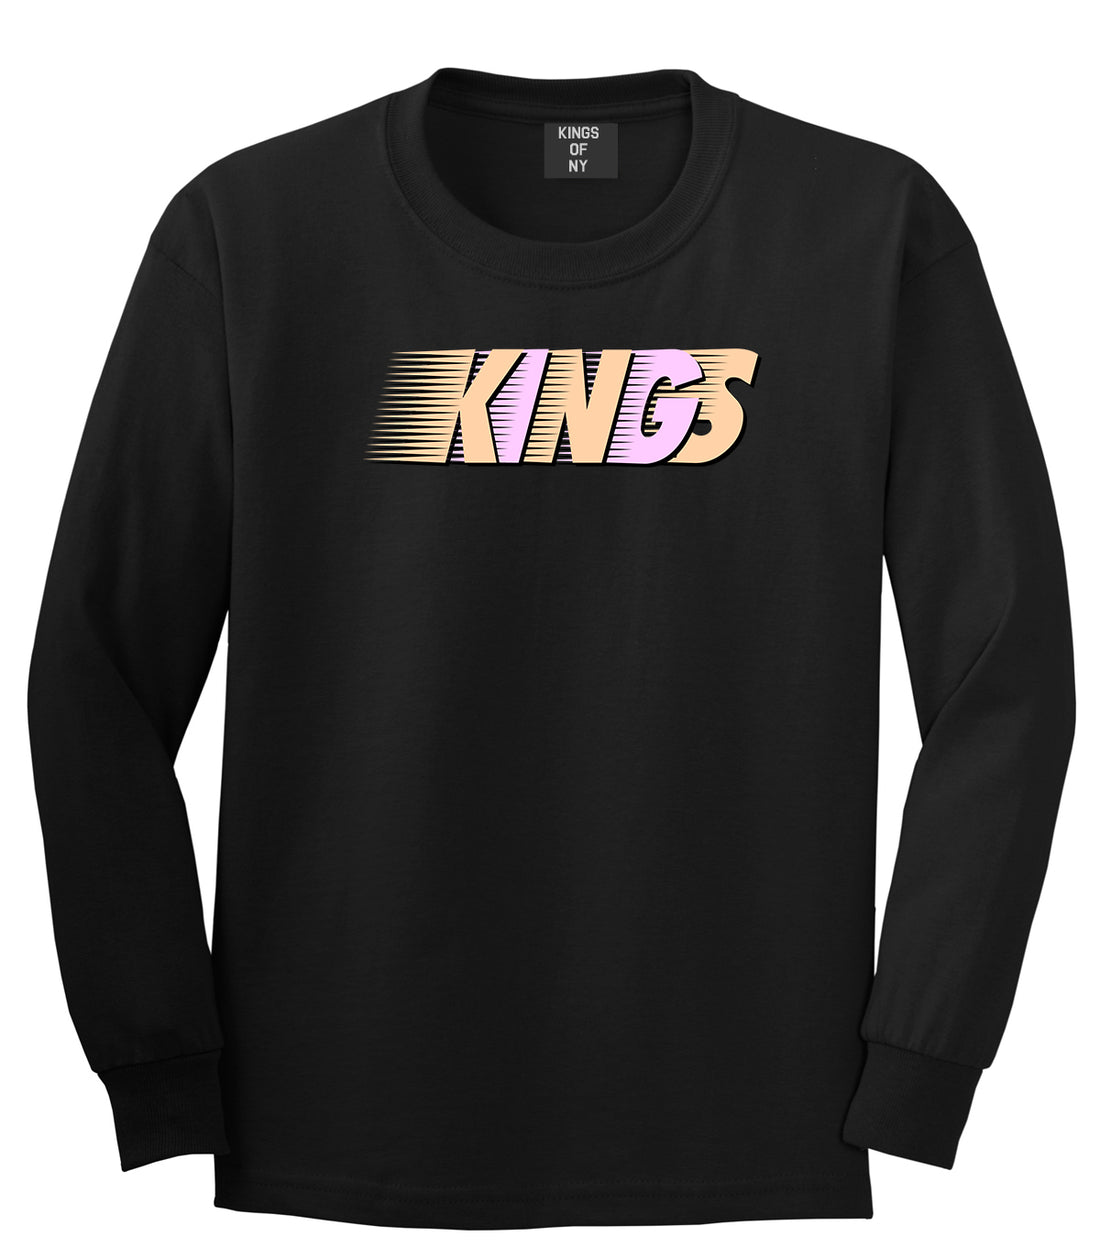 KINGS Easter Long Sleeve T-Shirt in Black